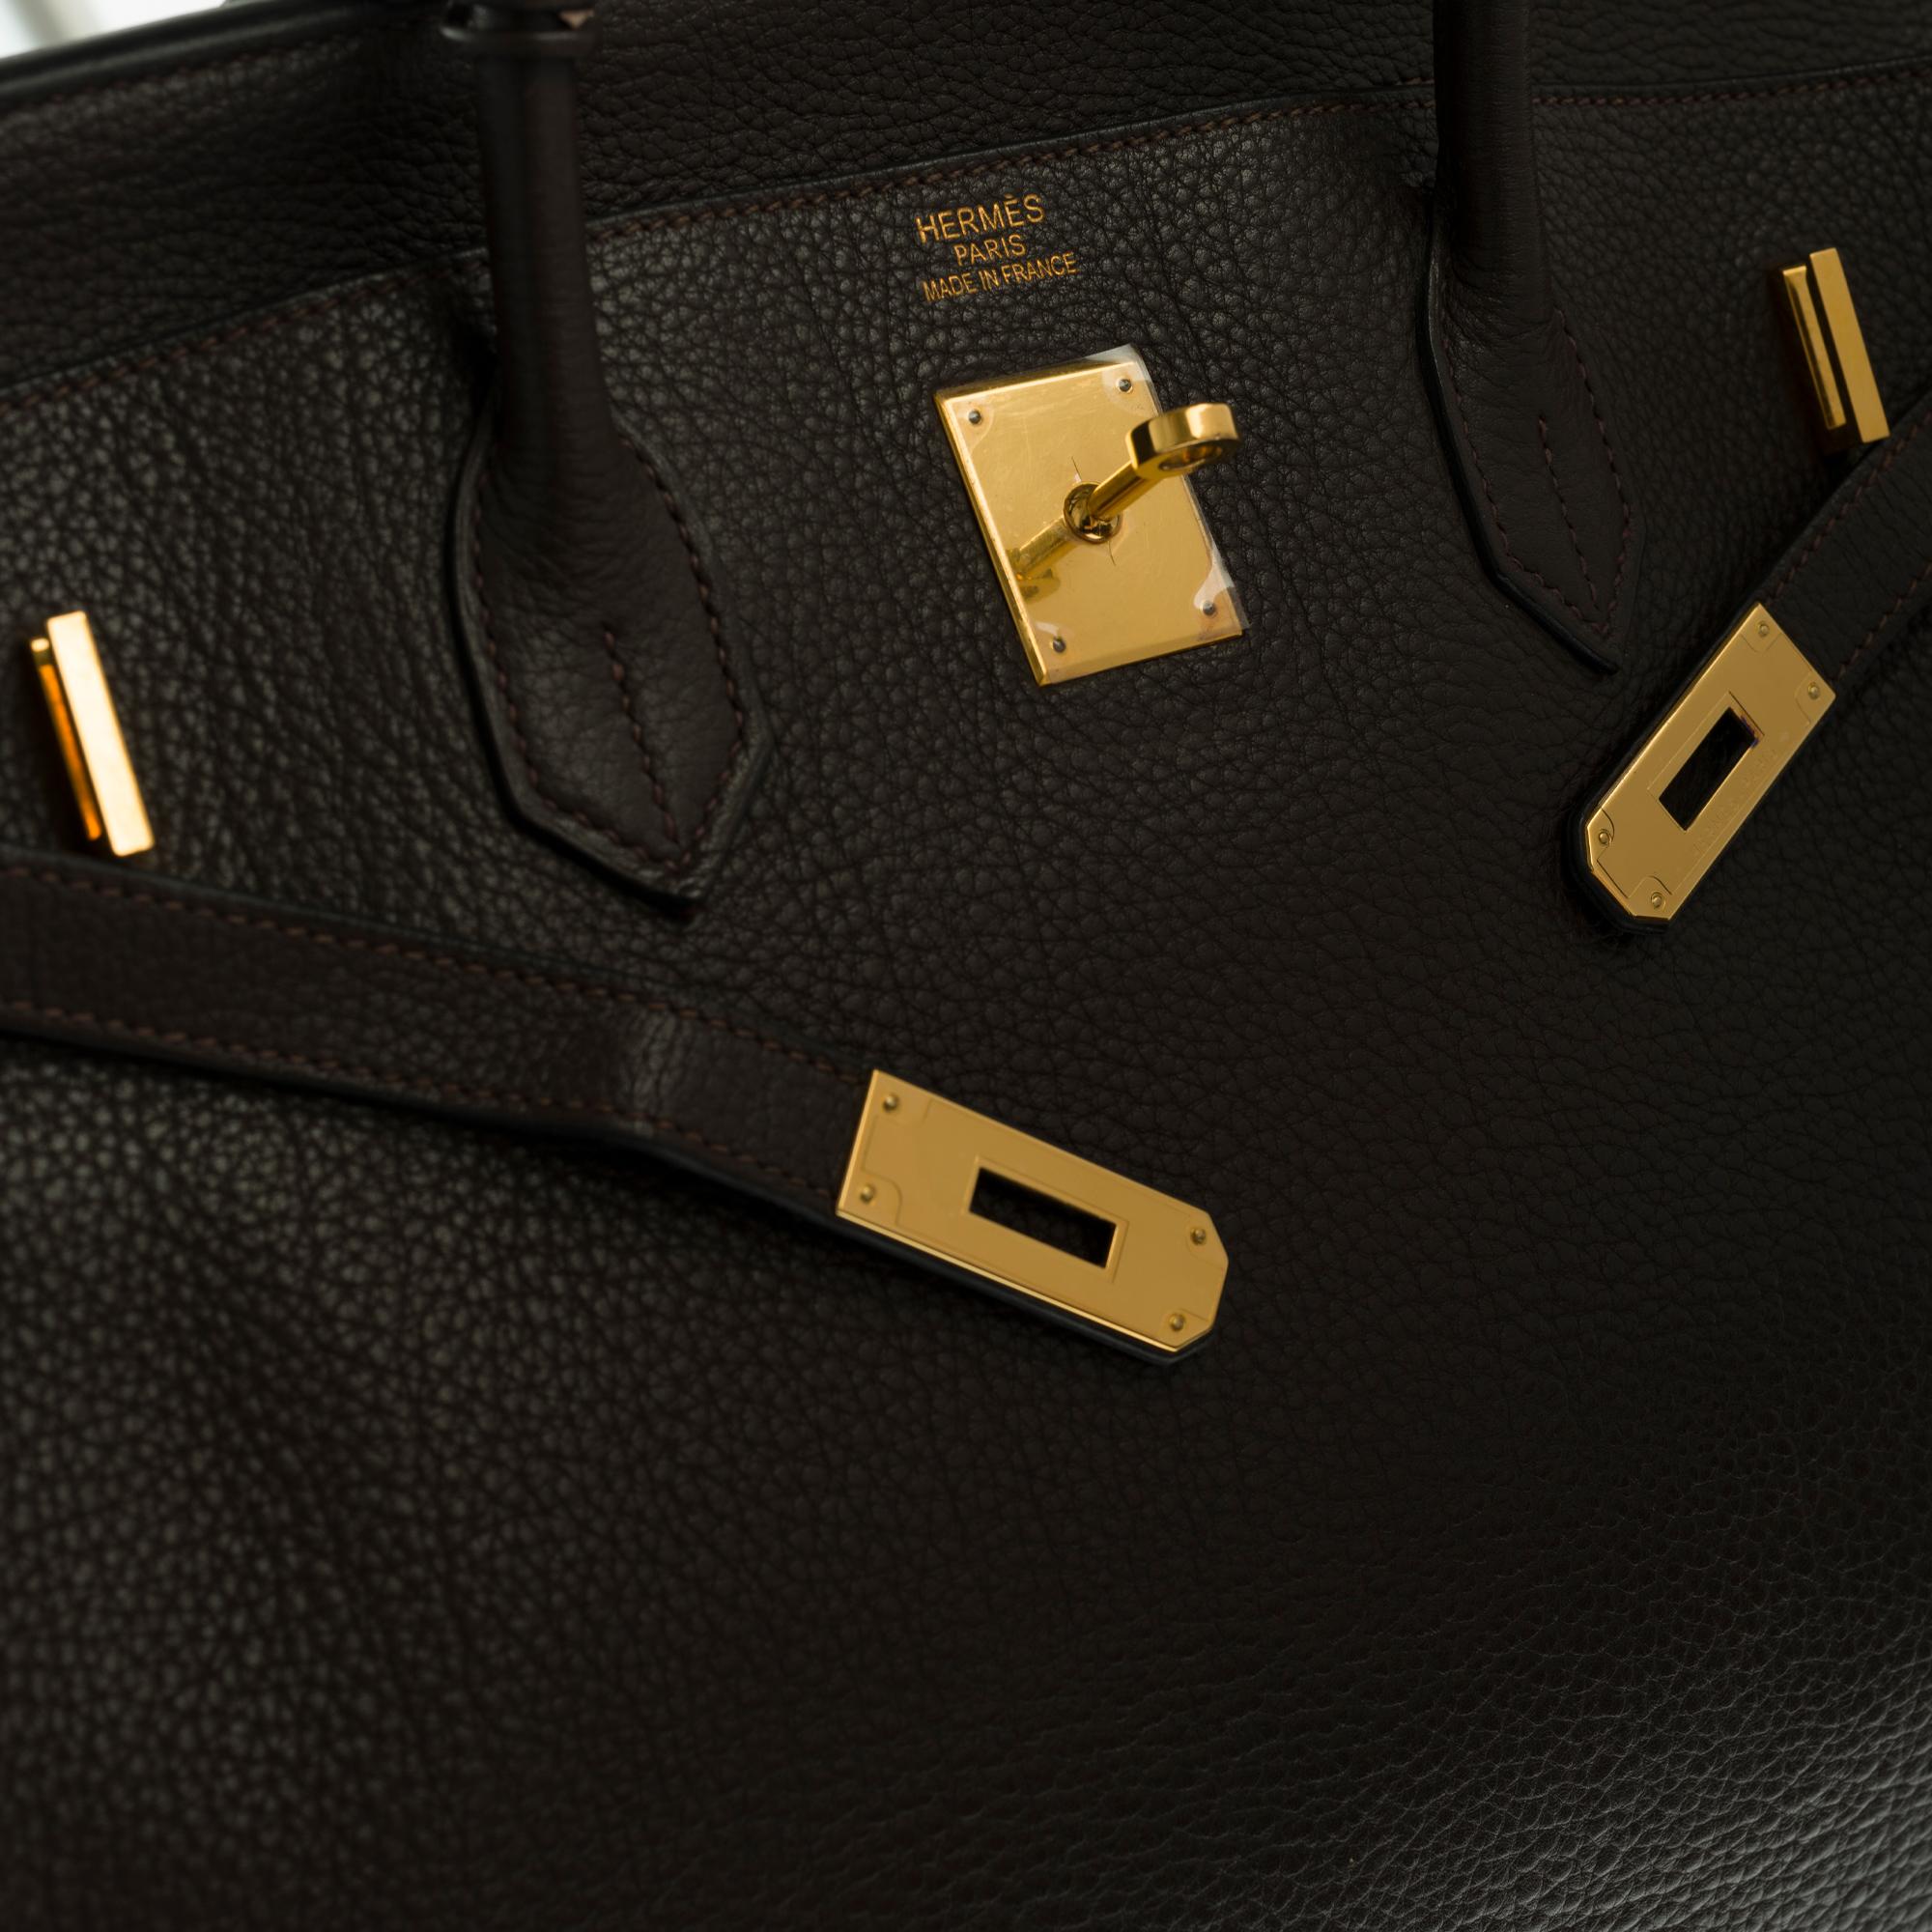 Women's or Men's Stunning Hermes Birkin 40cm handbag in Brown Togo leather with gold hardware